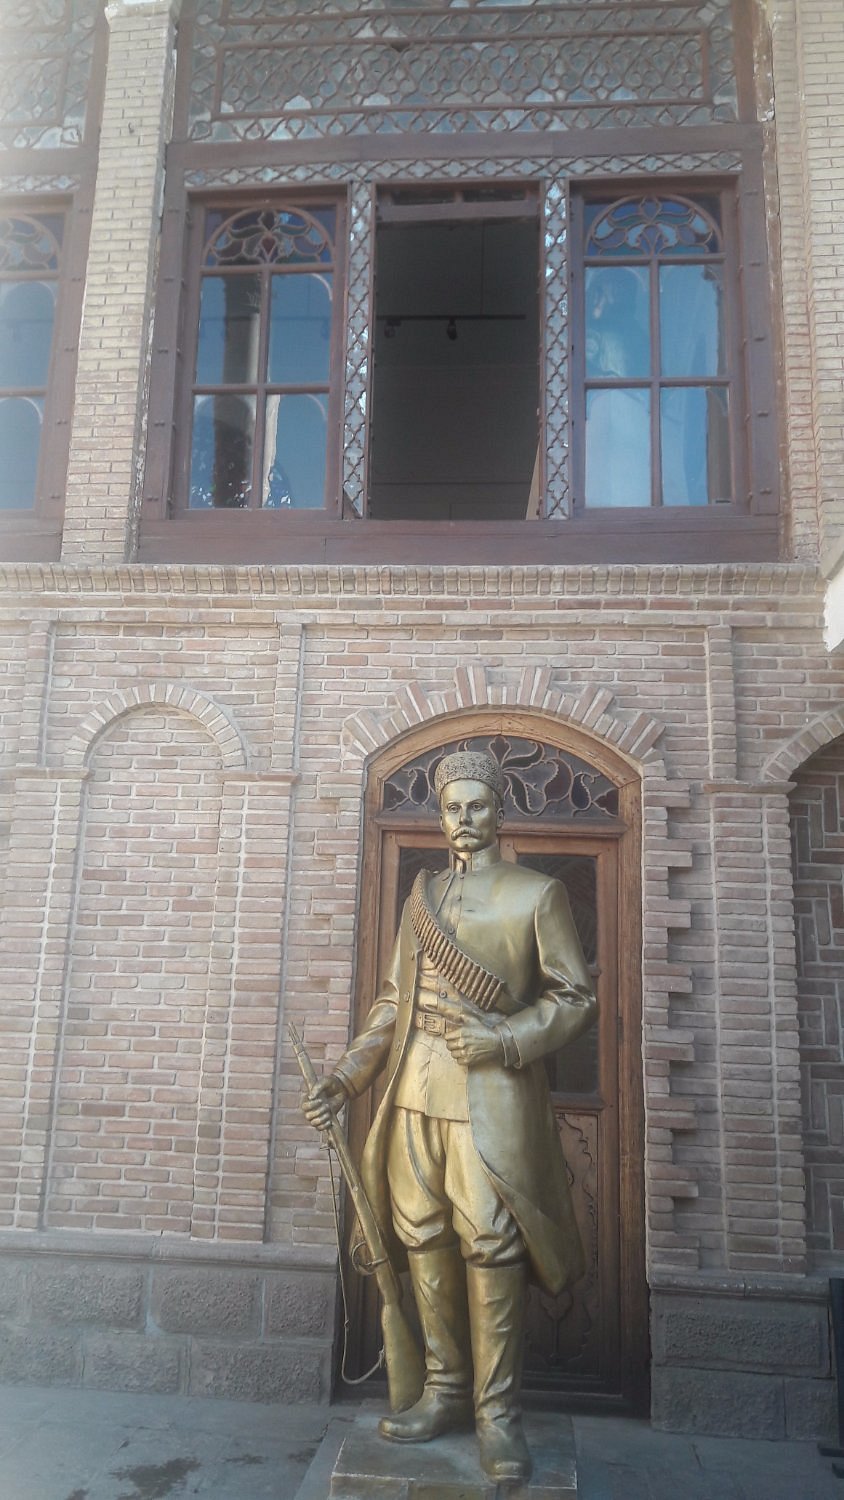 Constitution House of Tabriz, Tabriz